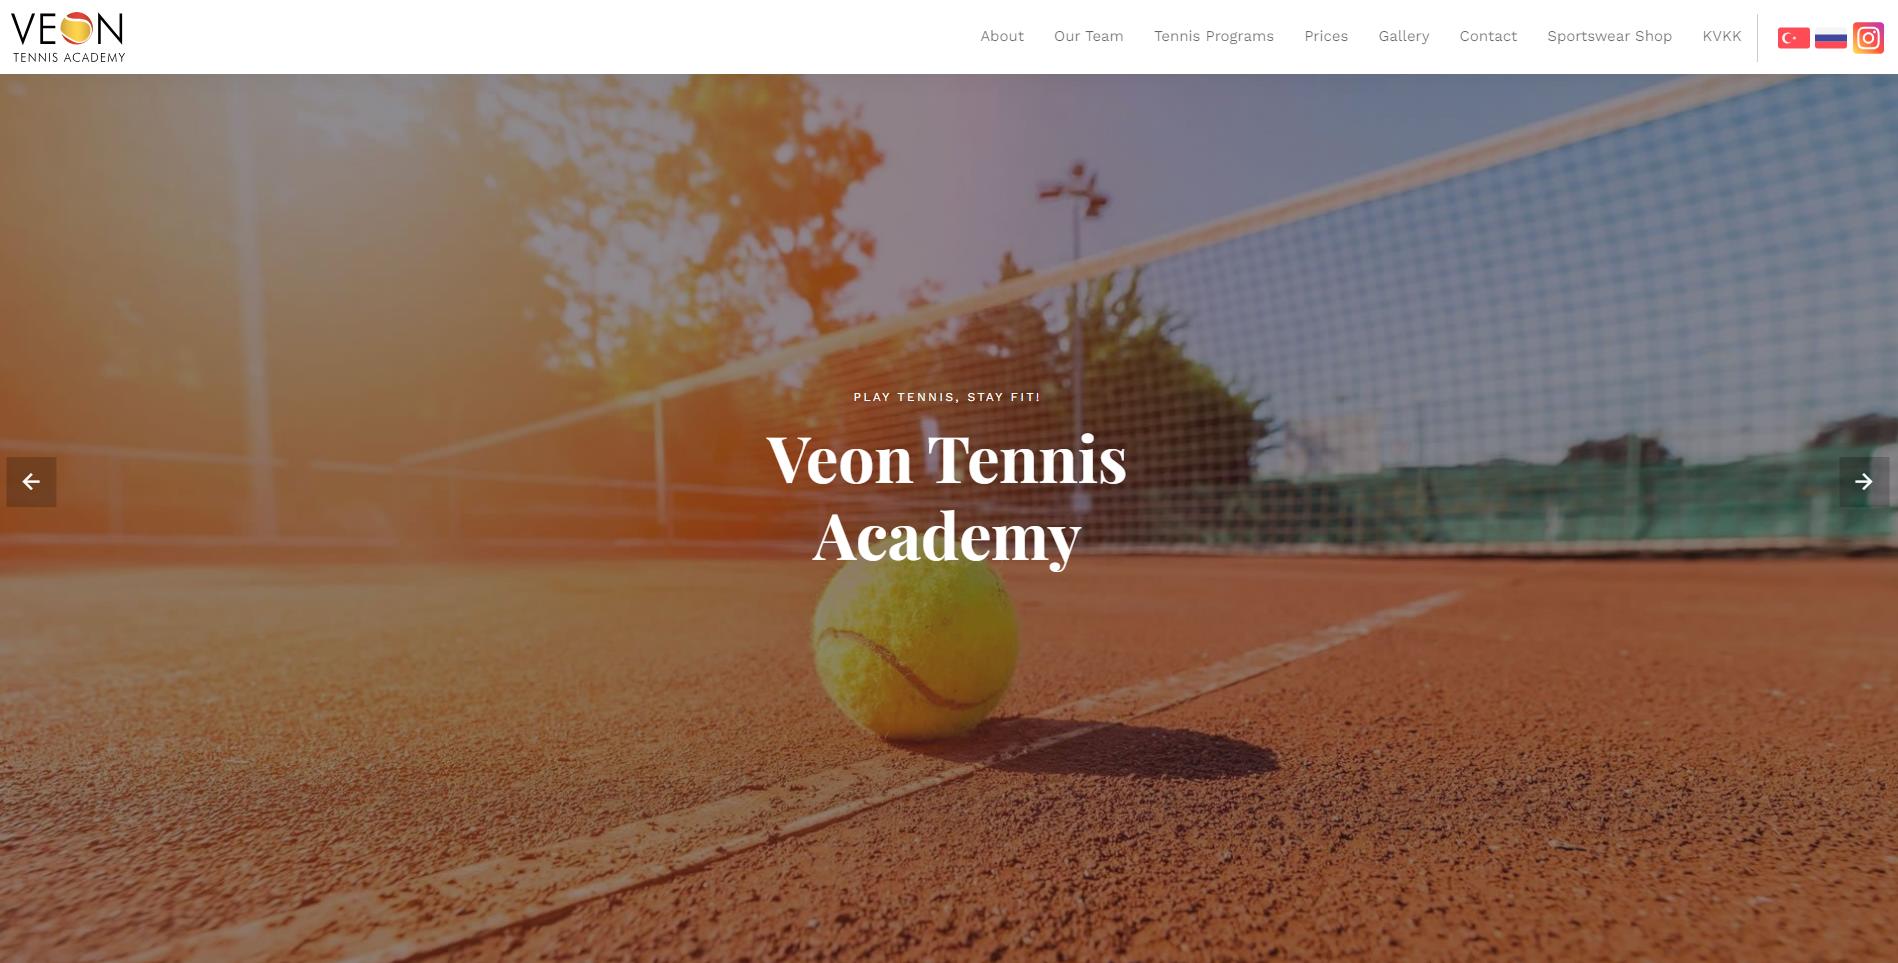 Royal Tennis Academy 189